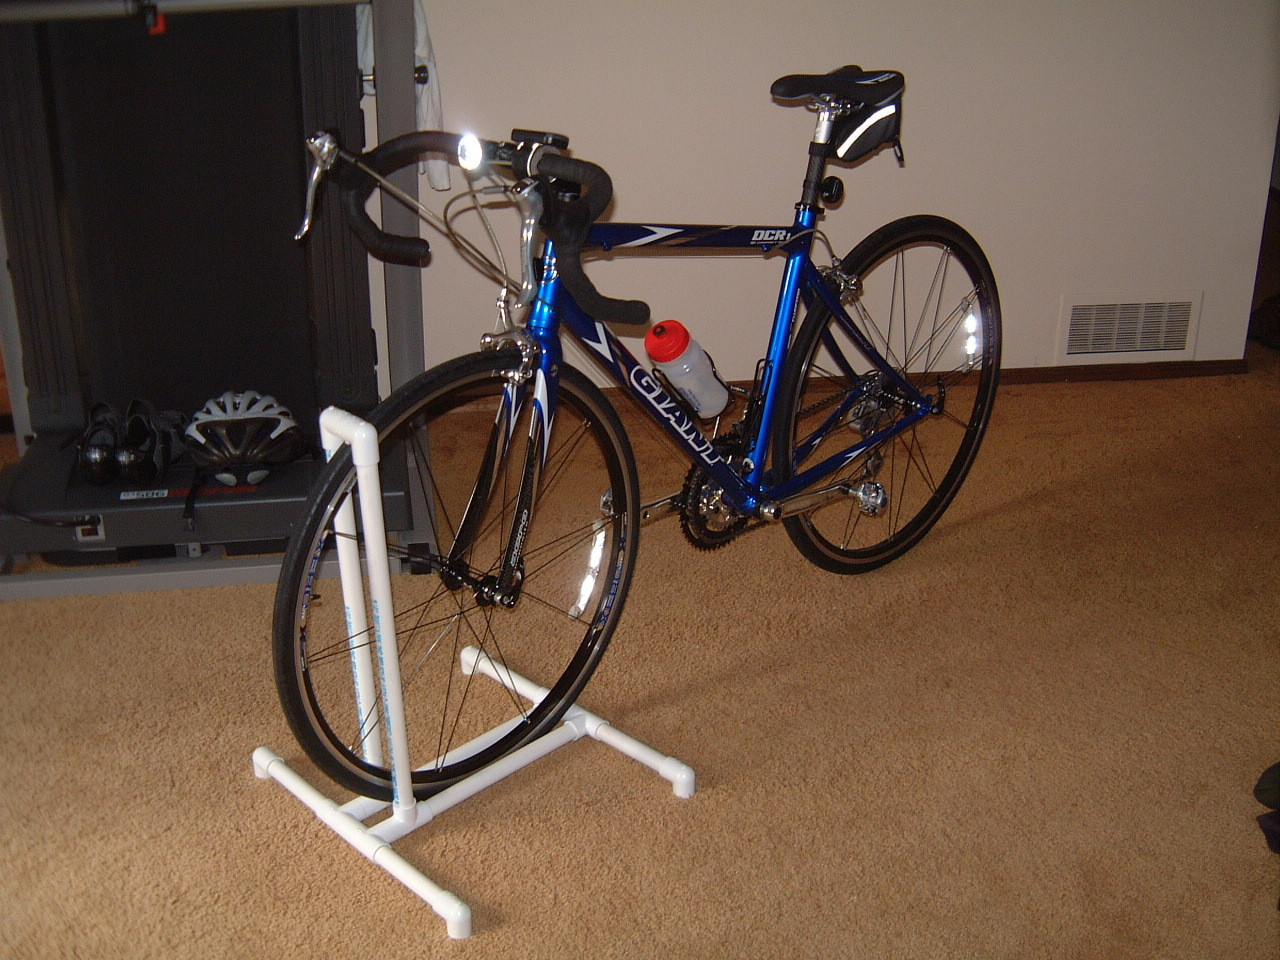 Best ideas about DIY Bike Rack Garage
. Save or Pin Bike Rack Now.